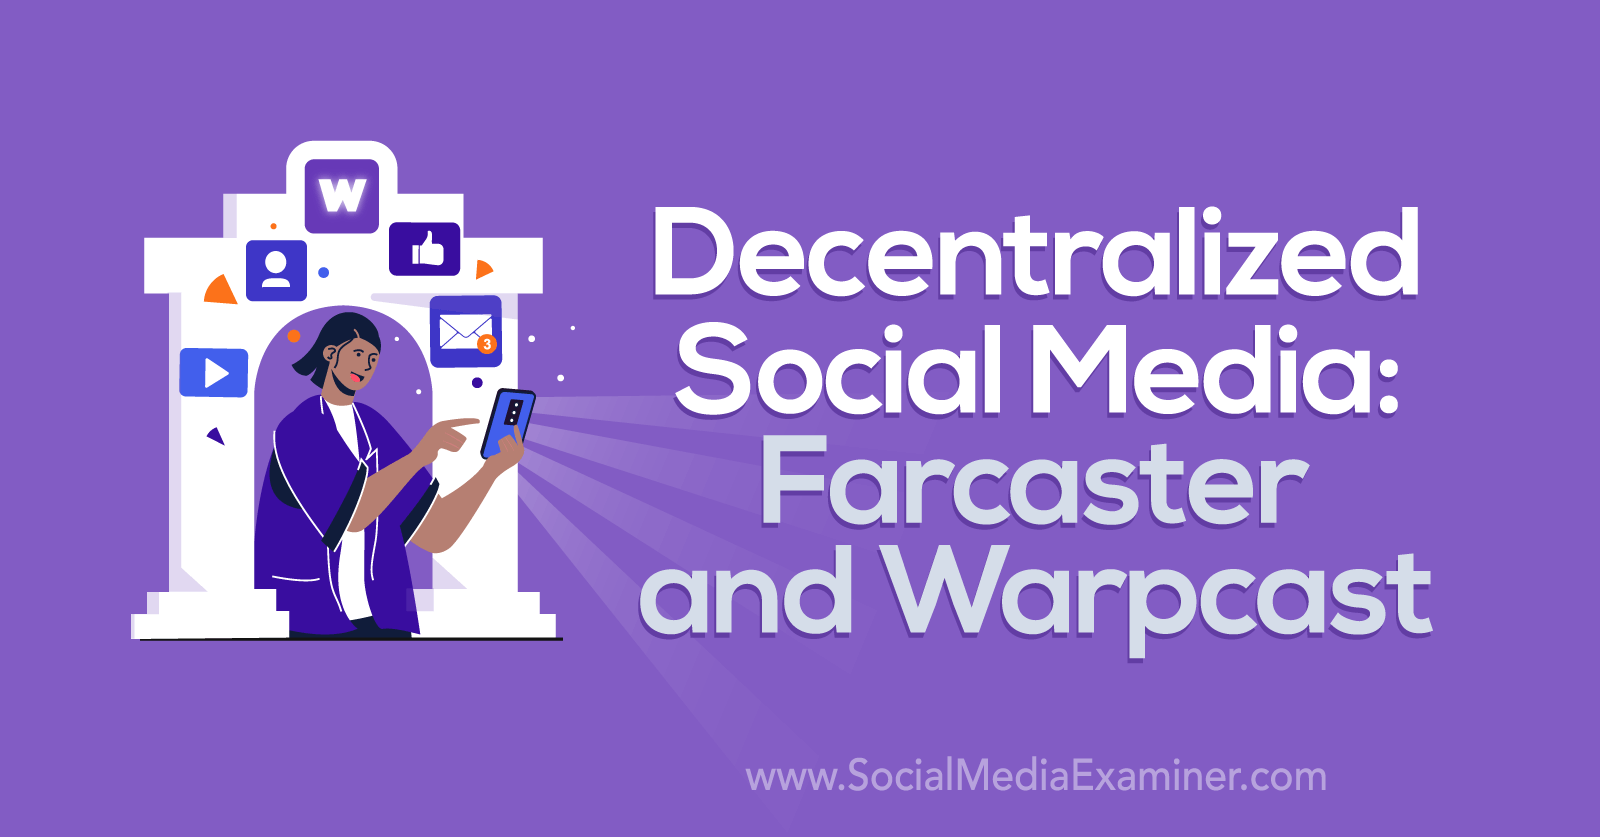 Decentralized Social Media: Farcaster and Warpcast by Social Media Examiner